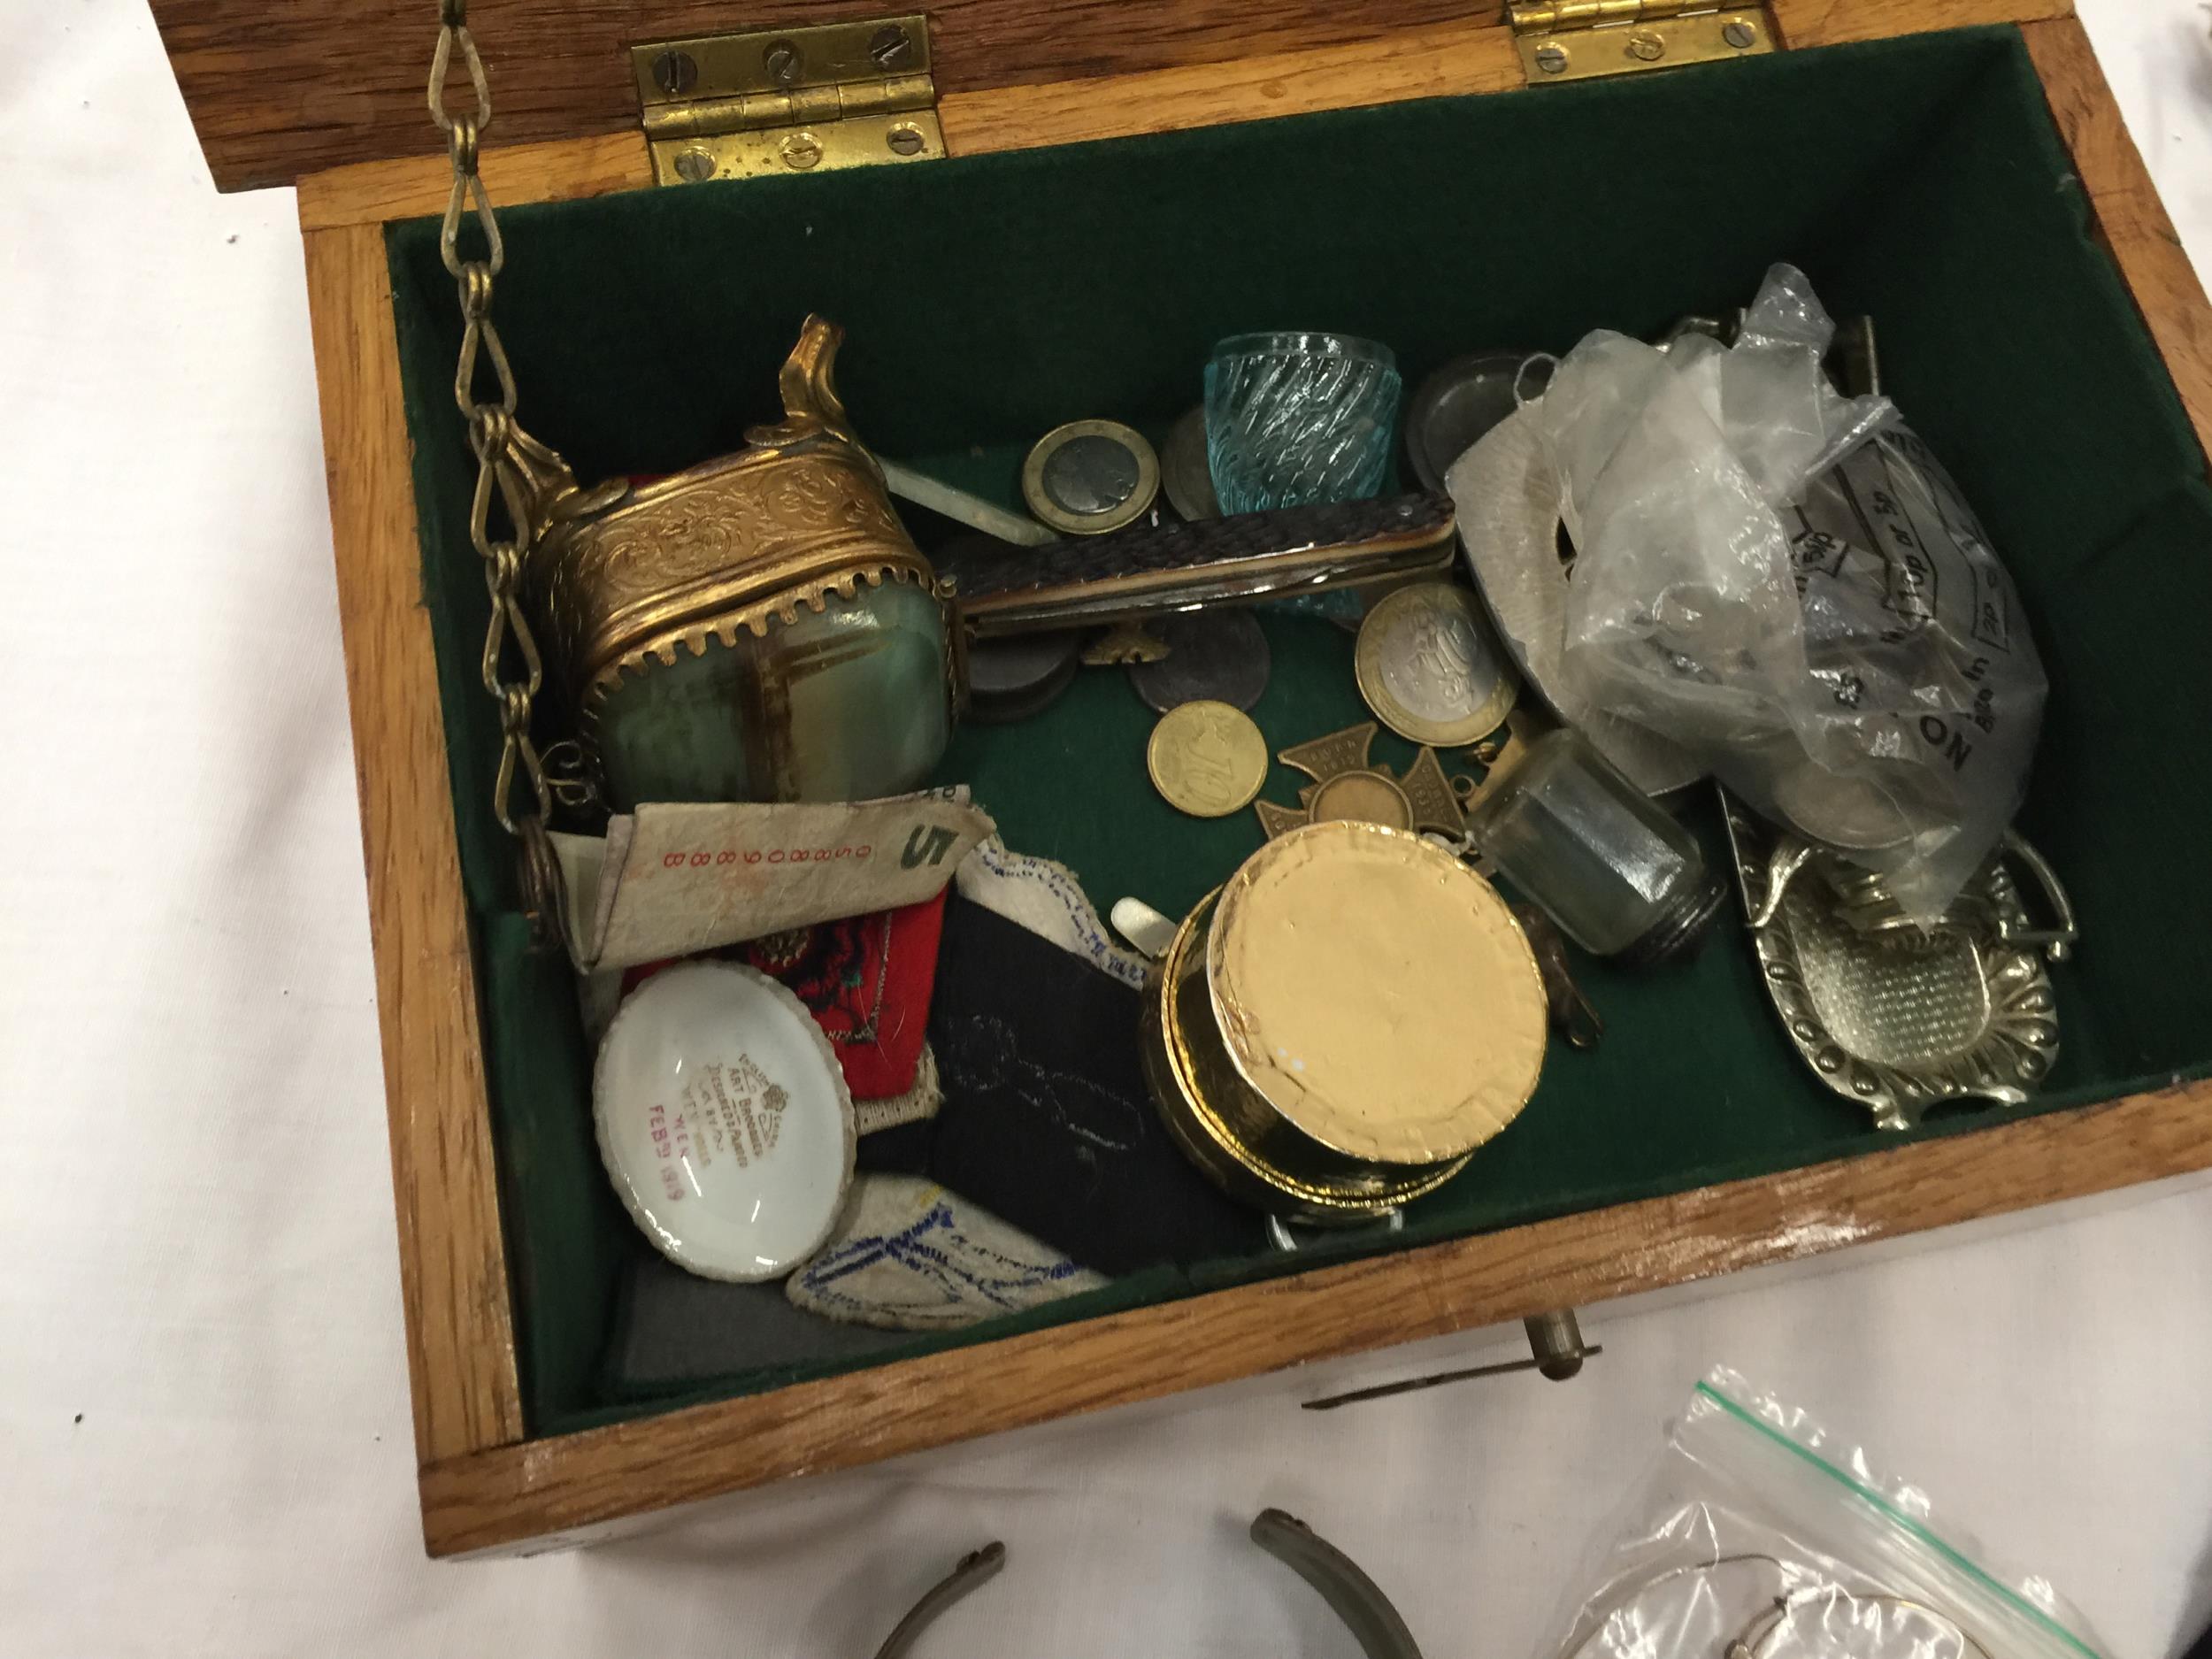 AN OAK BOX WITH A MILITARY EMBLEM CONTAINING MEDALS, BADGES, COINS, PEN KNIFE, LIGHTERS, ETC - Bild 3 aus 10